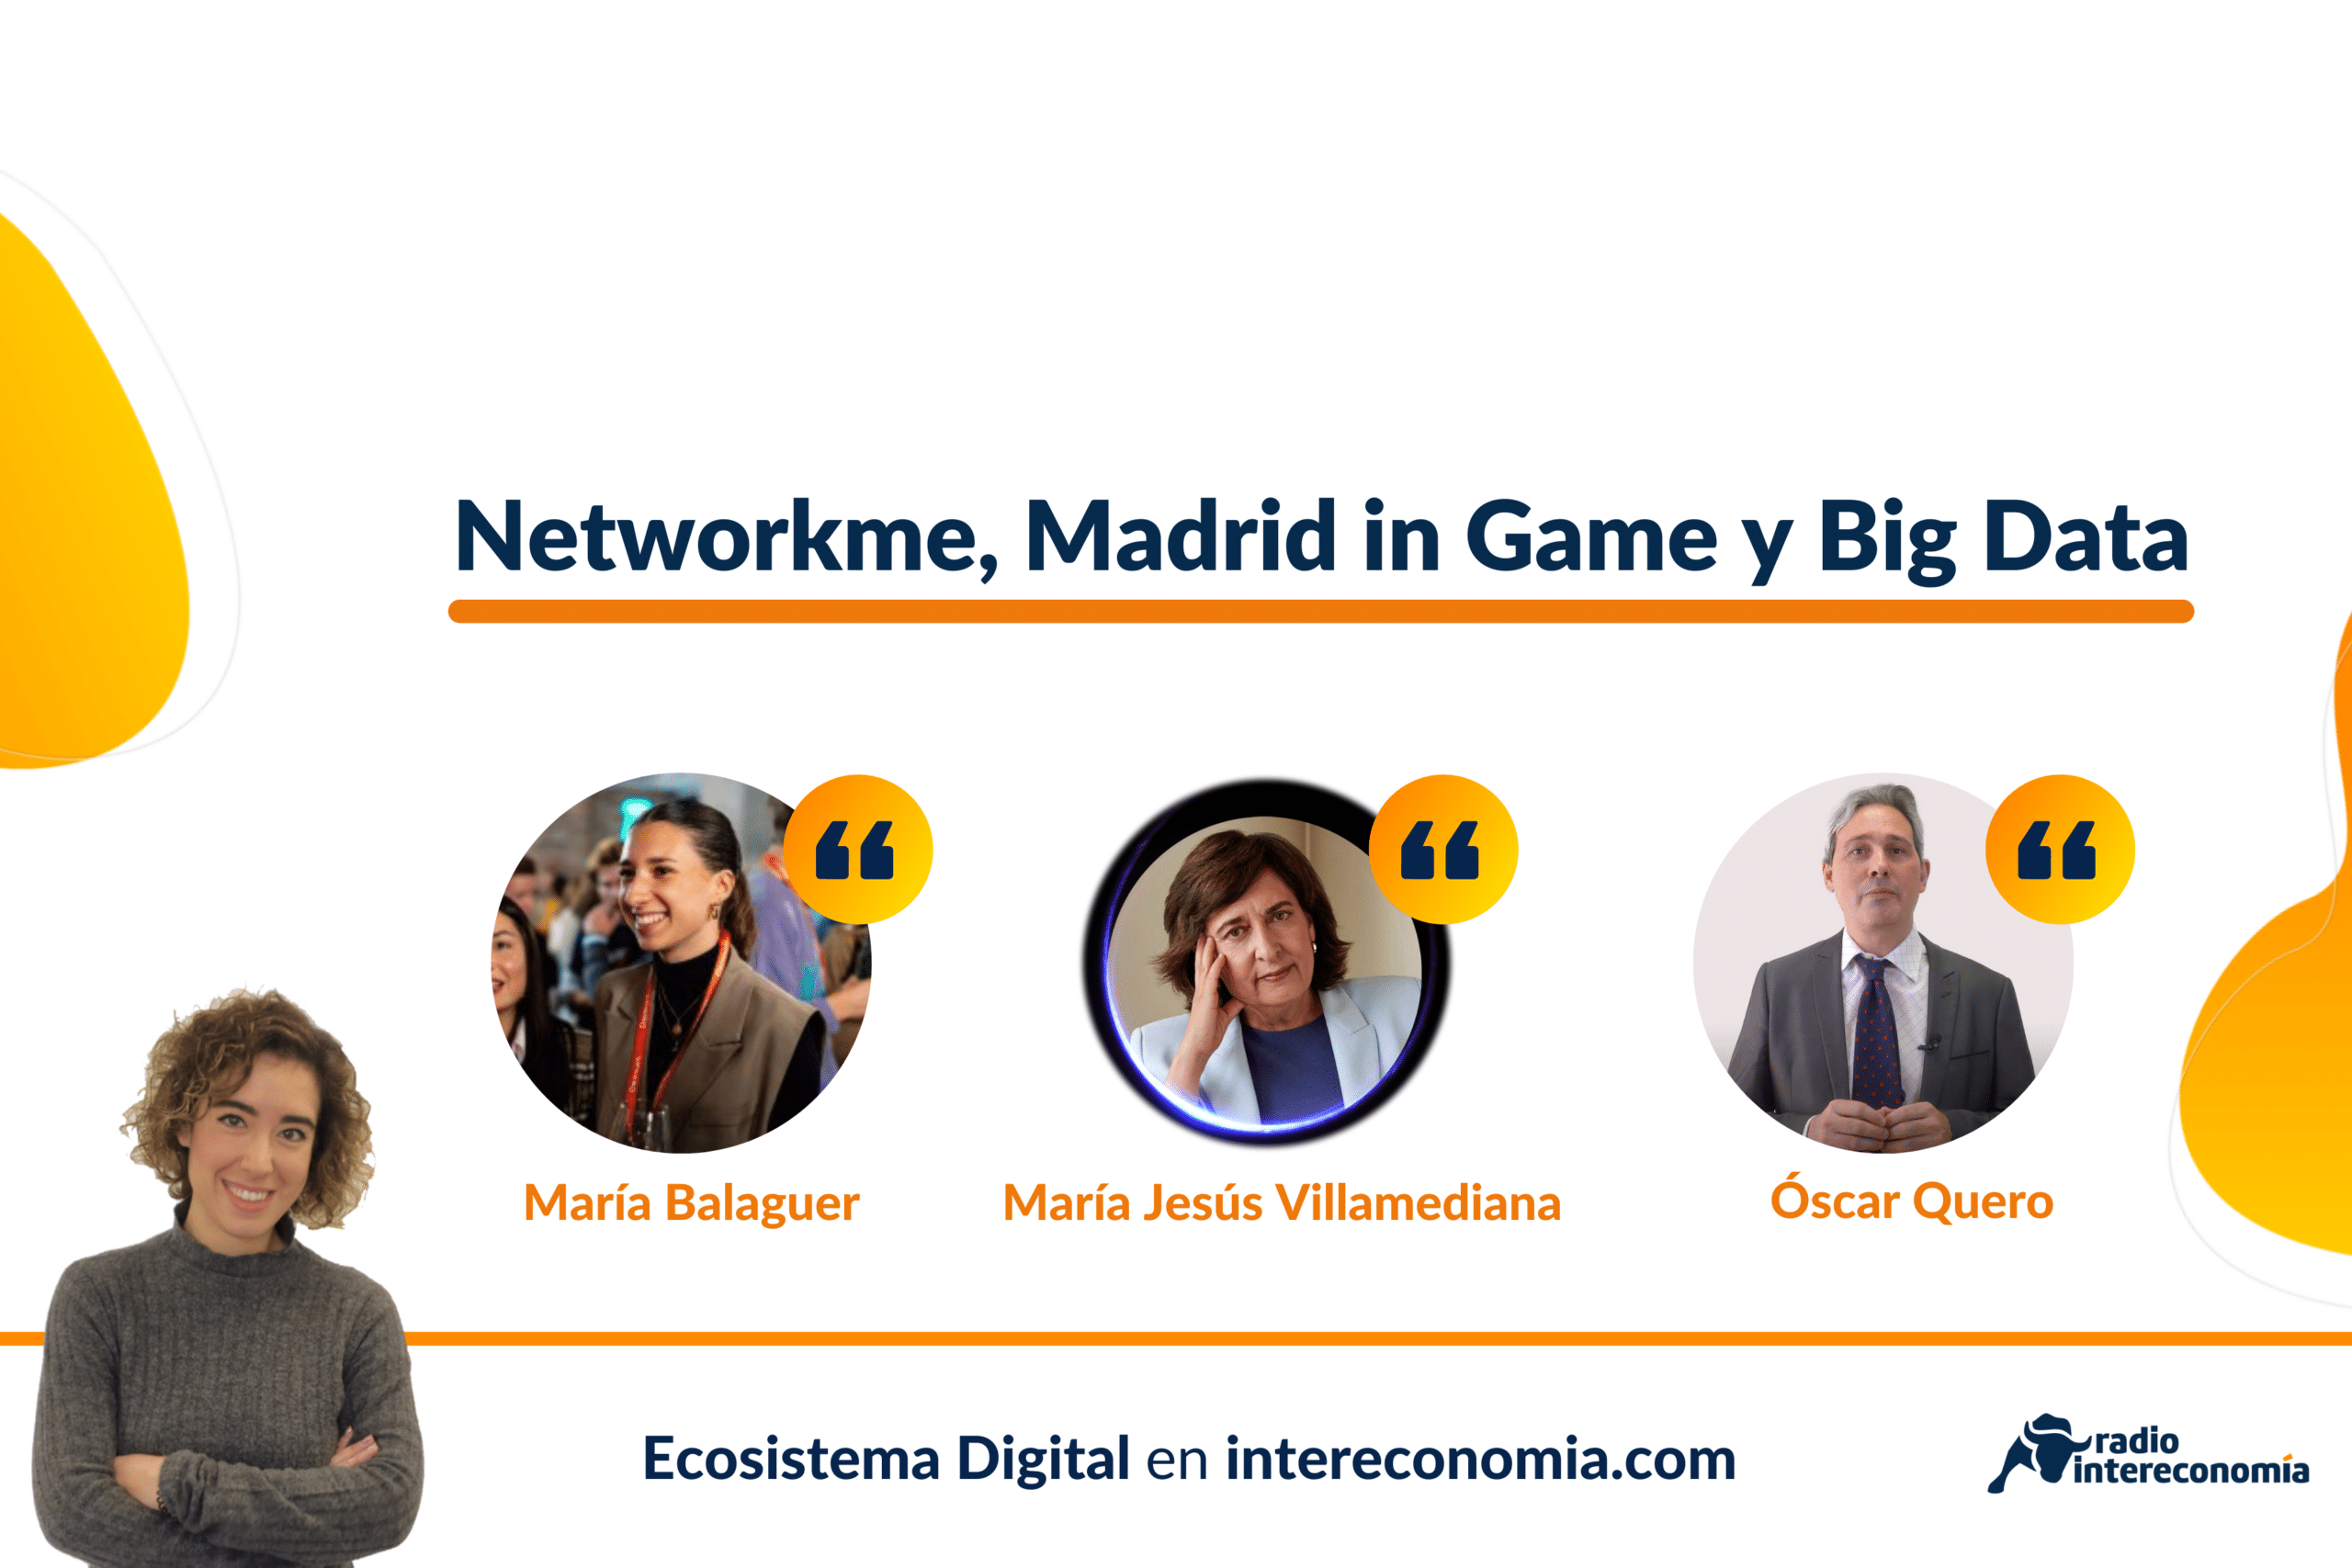 Ecosistema Digital 24/03: Networkme, Madrid y Game y Big Data